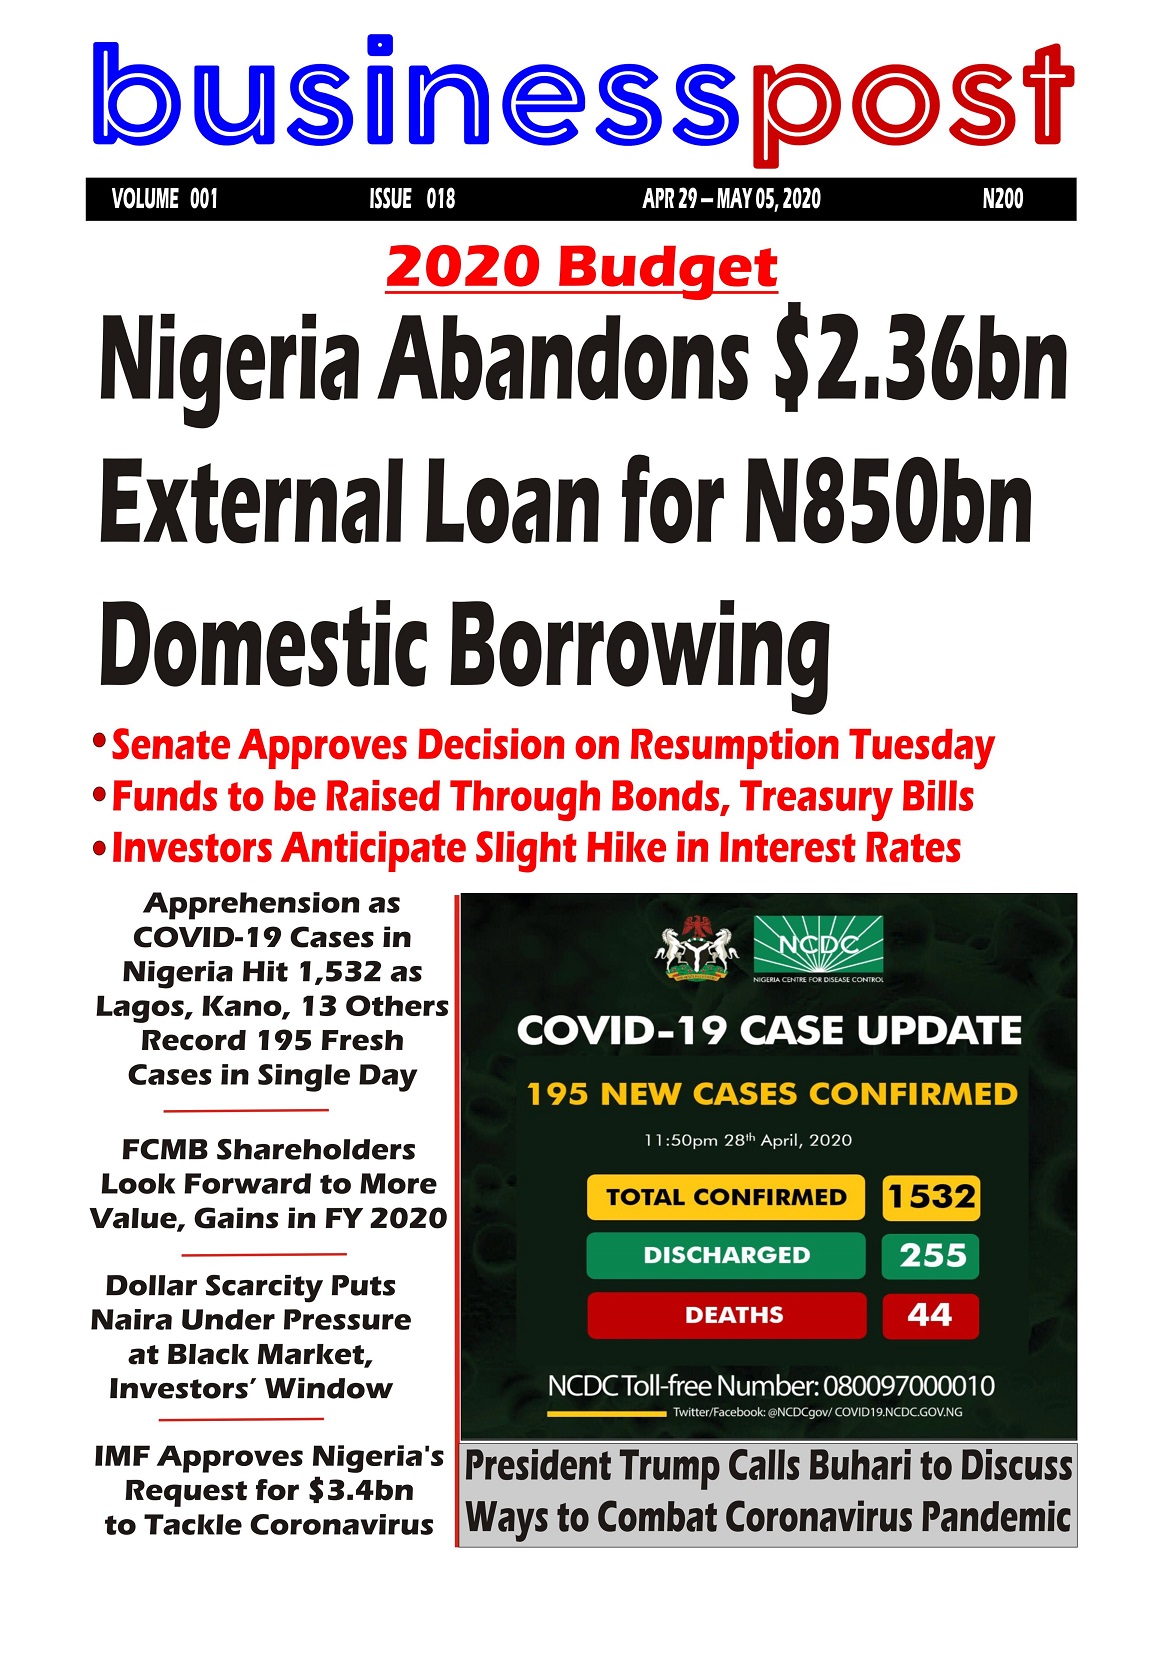 Nigeria Abandons $2.36bn External Loan for N850bn Local Borrowing